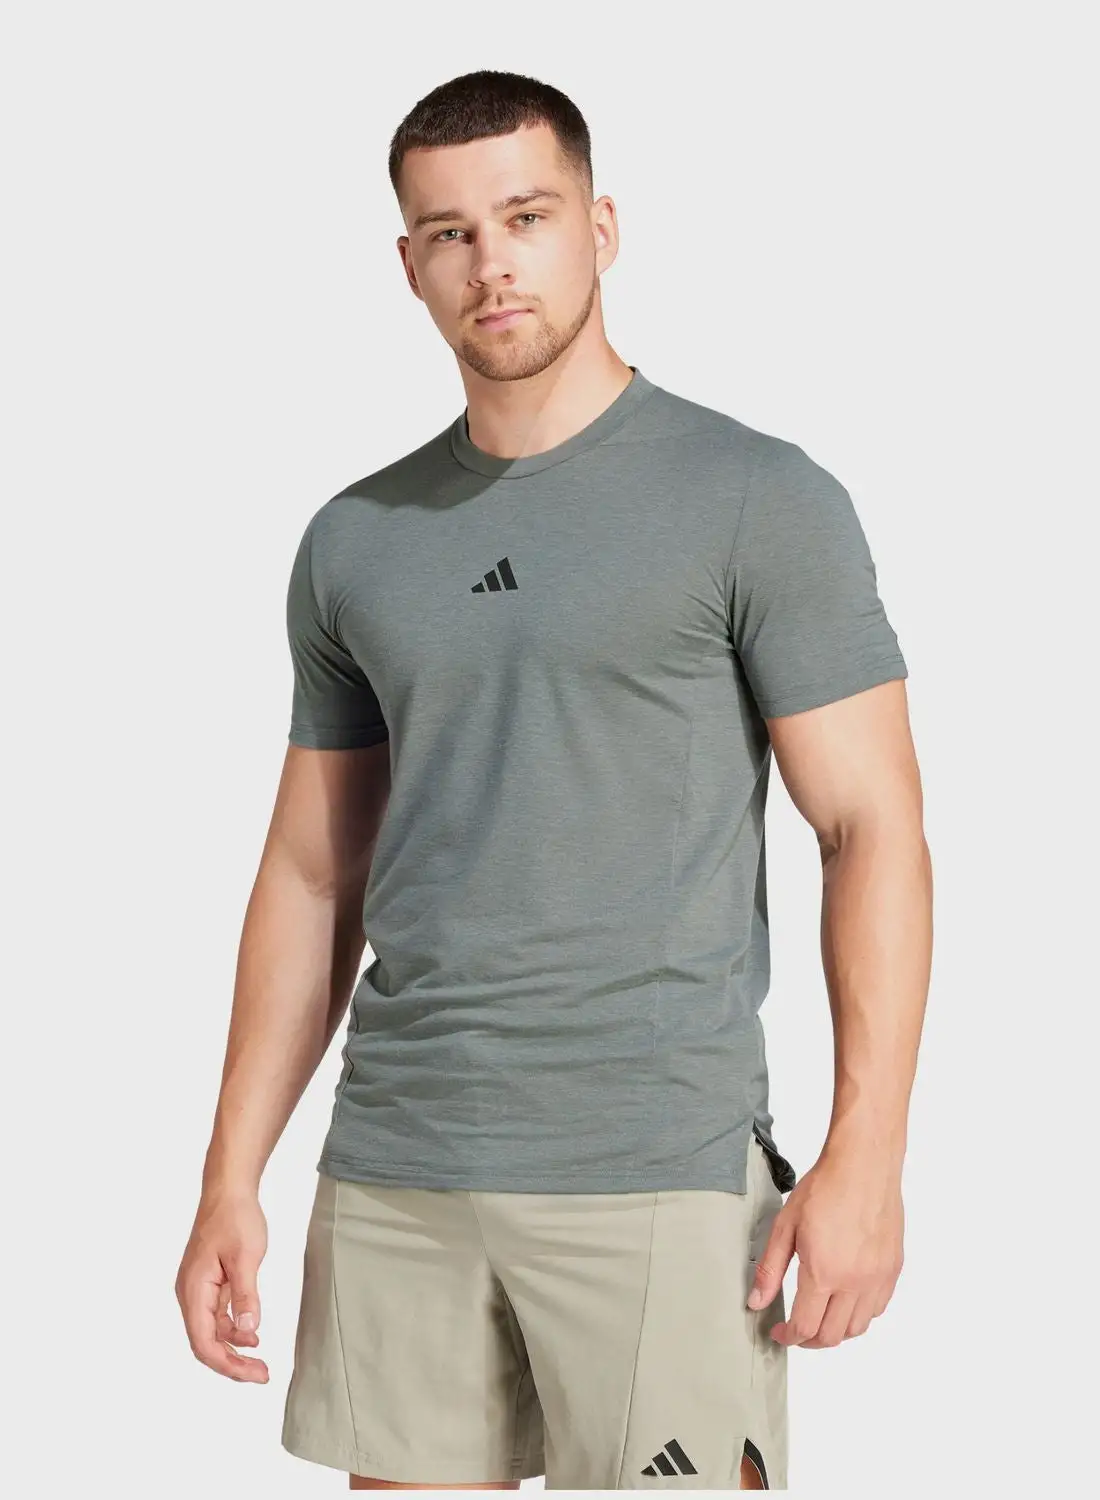 Adidas Designed For Training T-Shirt